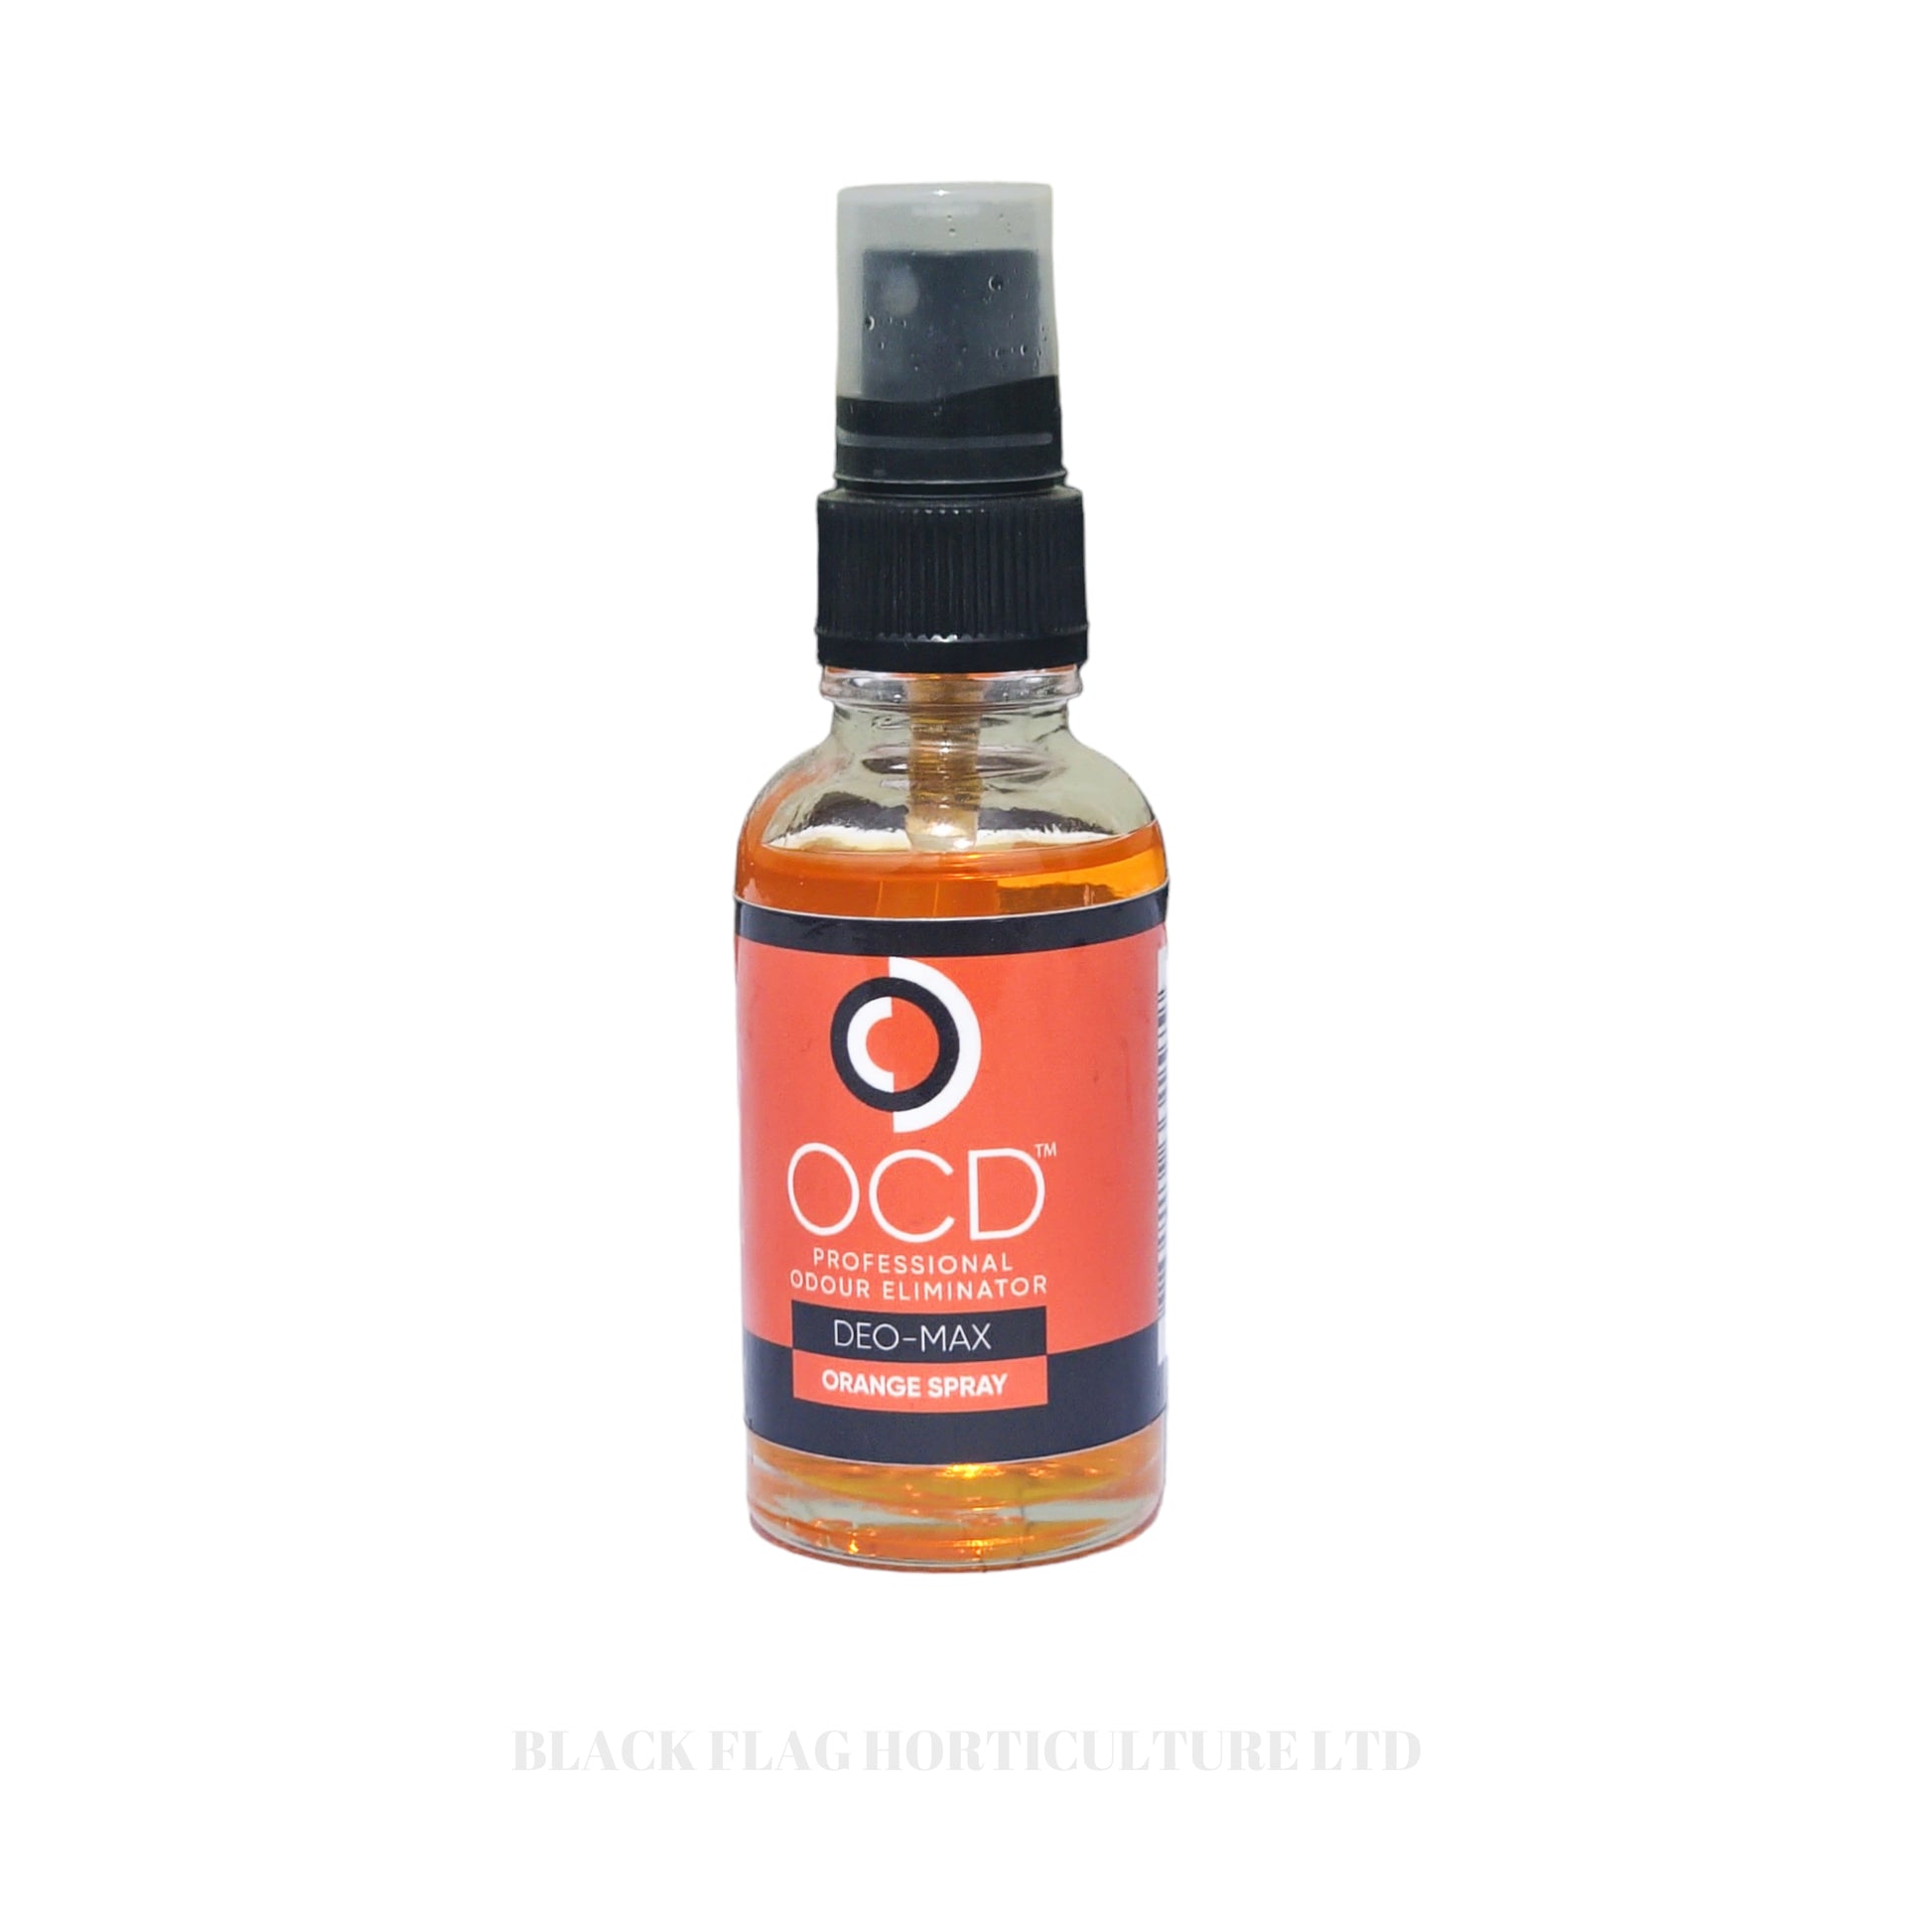 OCD - DEO Max Orange Spray - 30ml